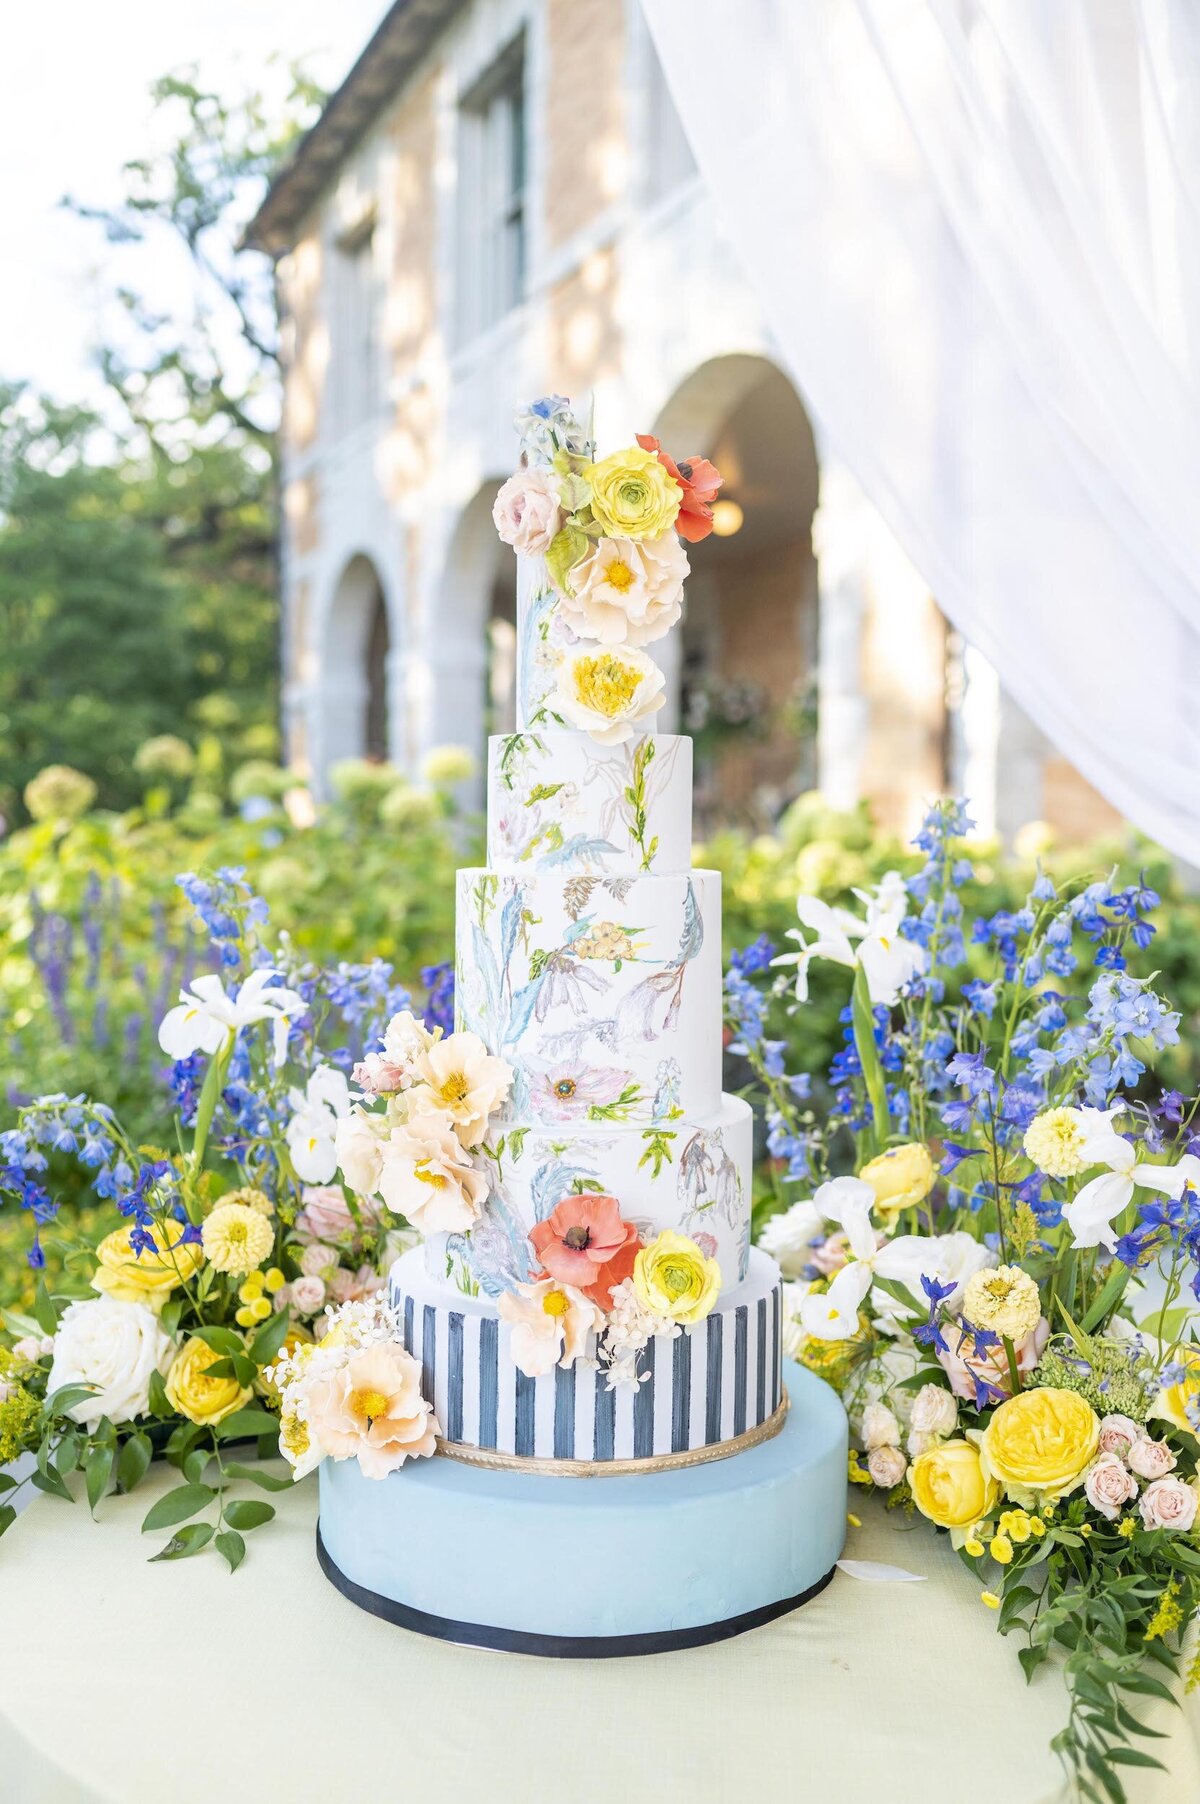 Wedding cake with yellow and orange flowers